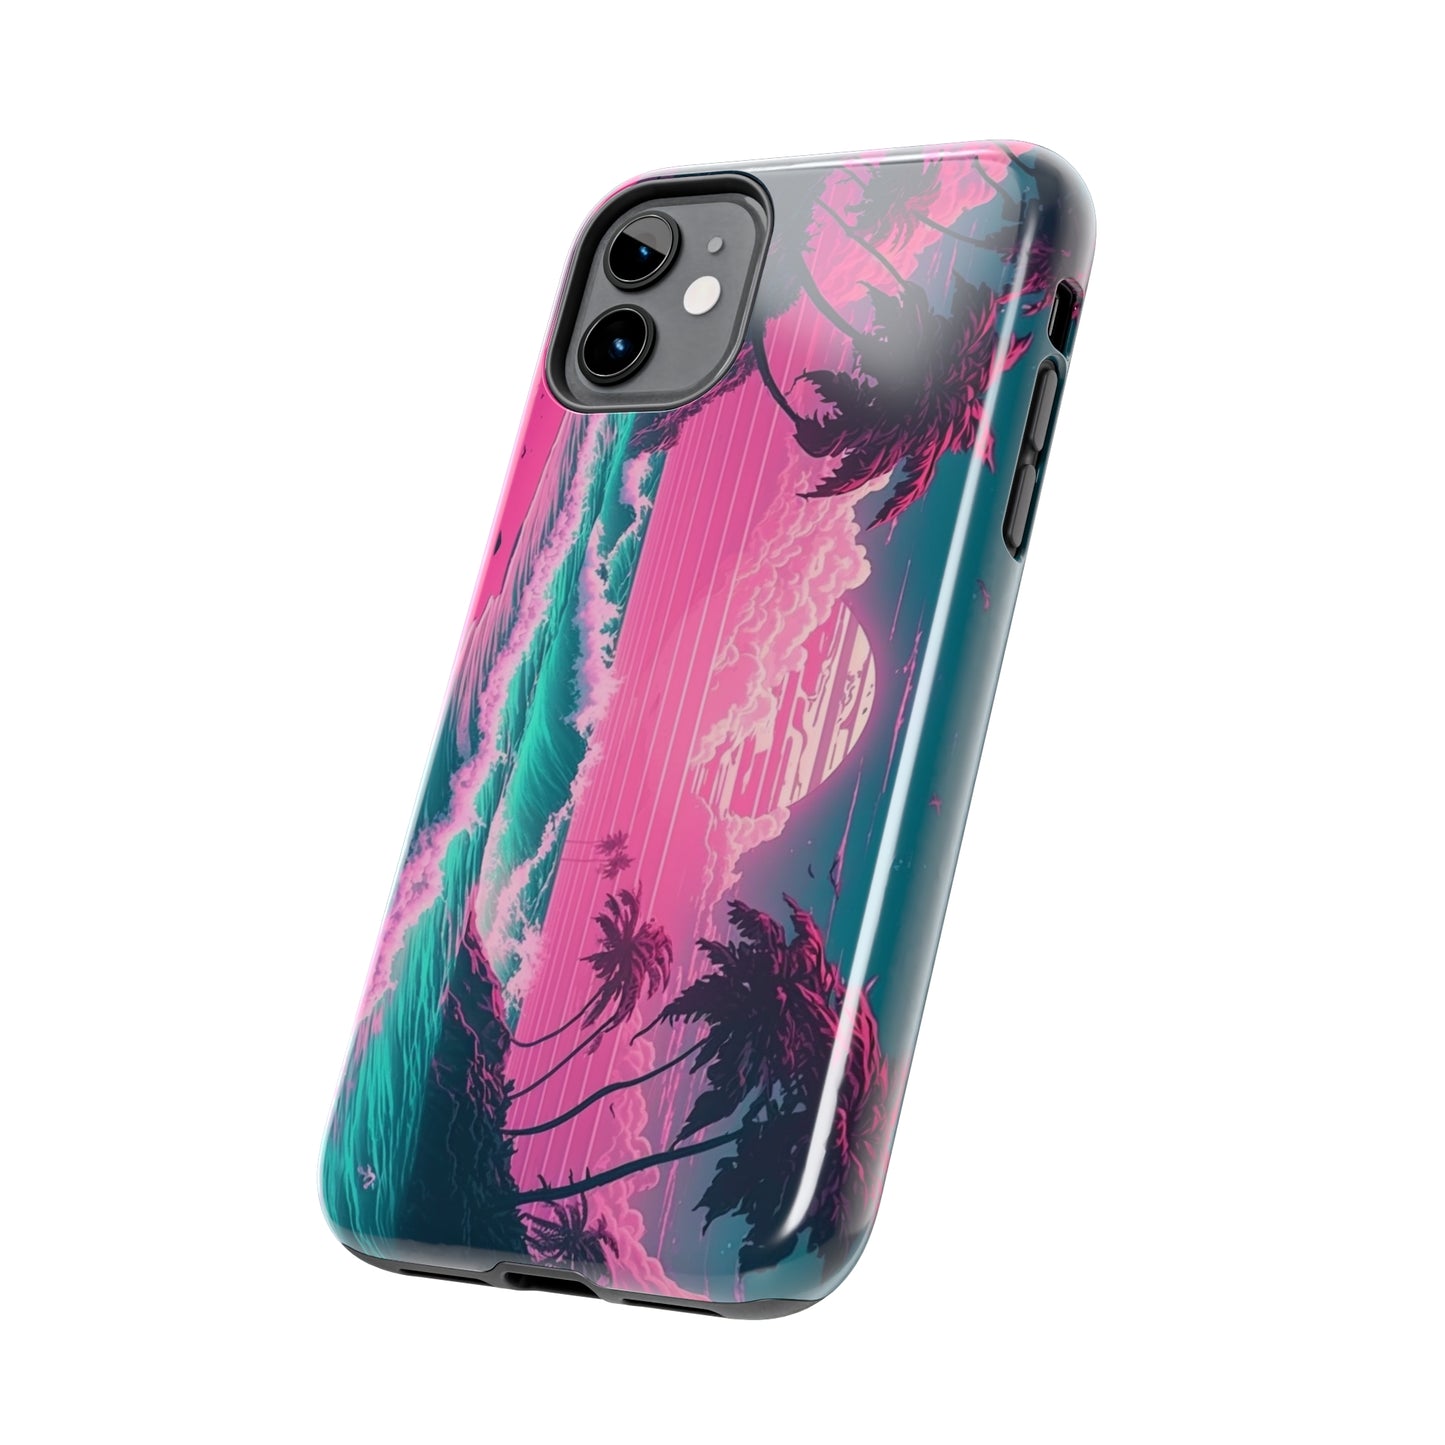 Vaporwave Beach Tough iPhone Case